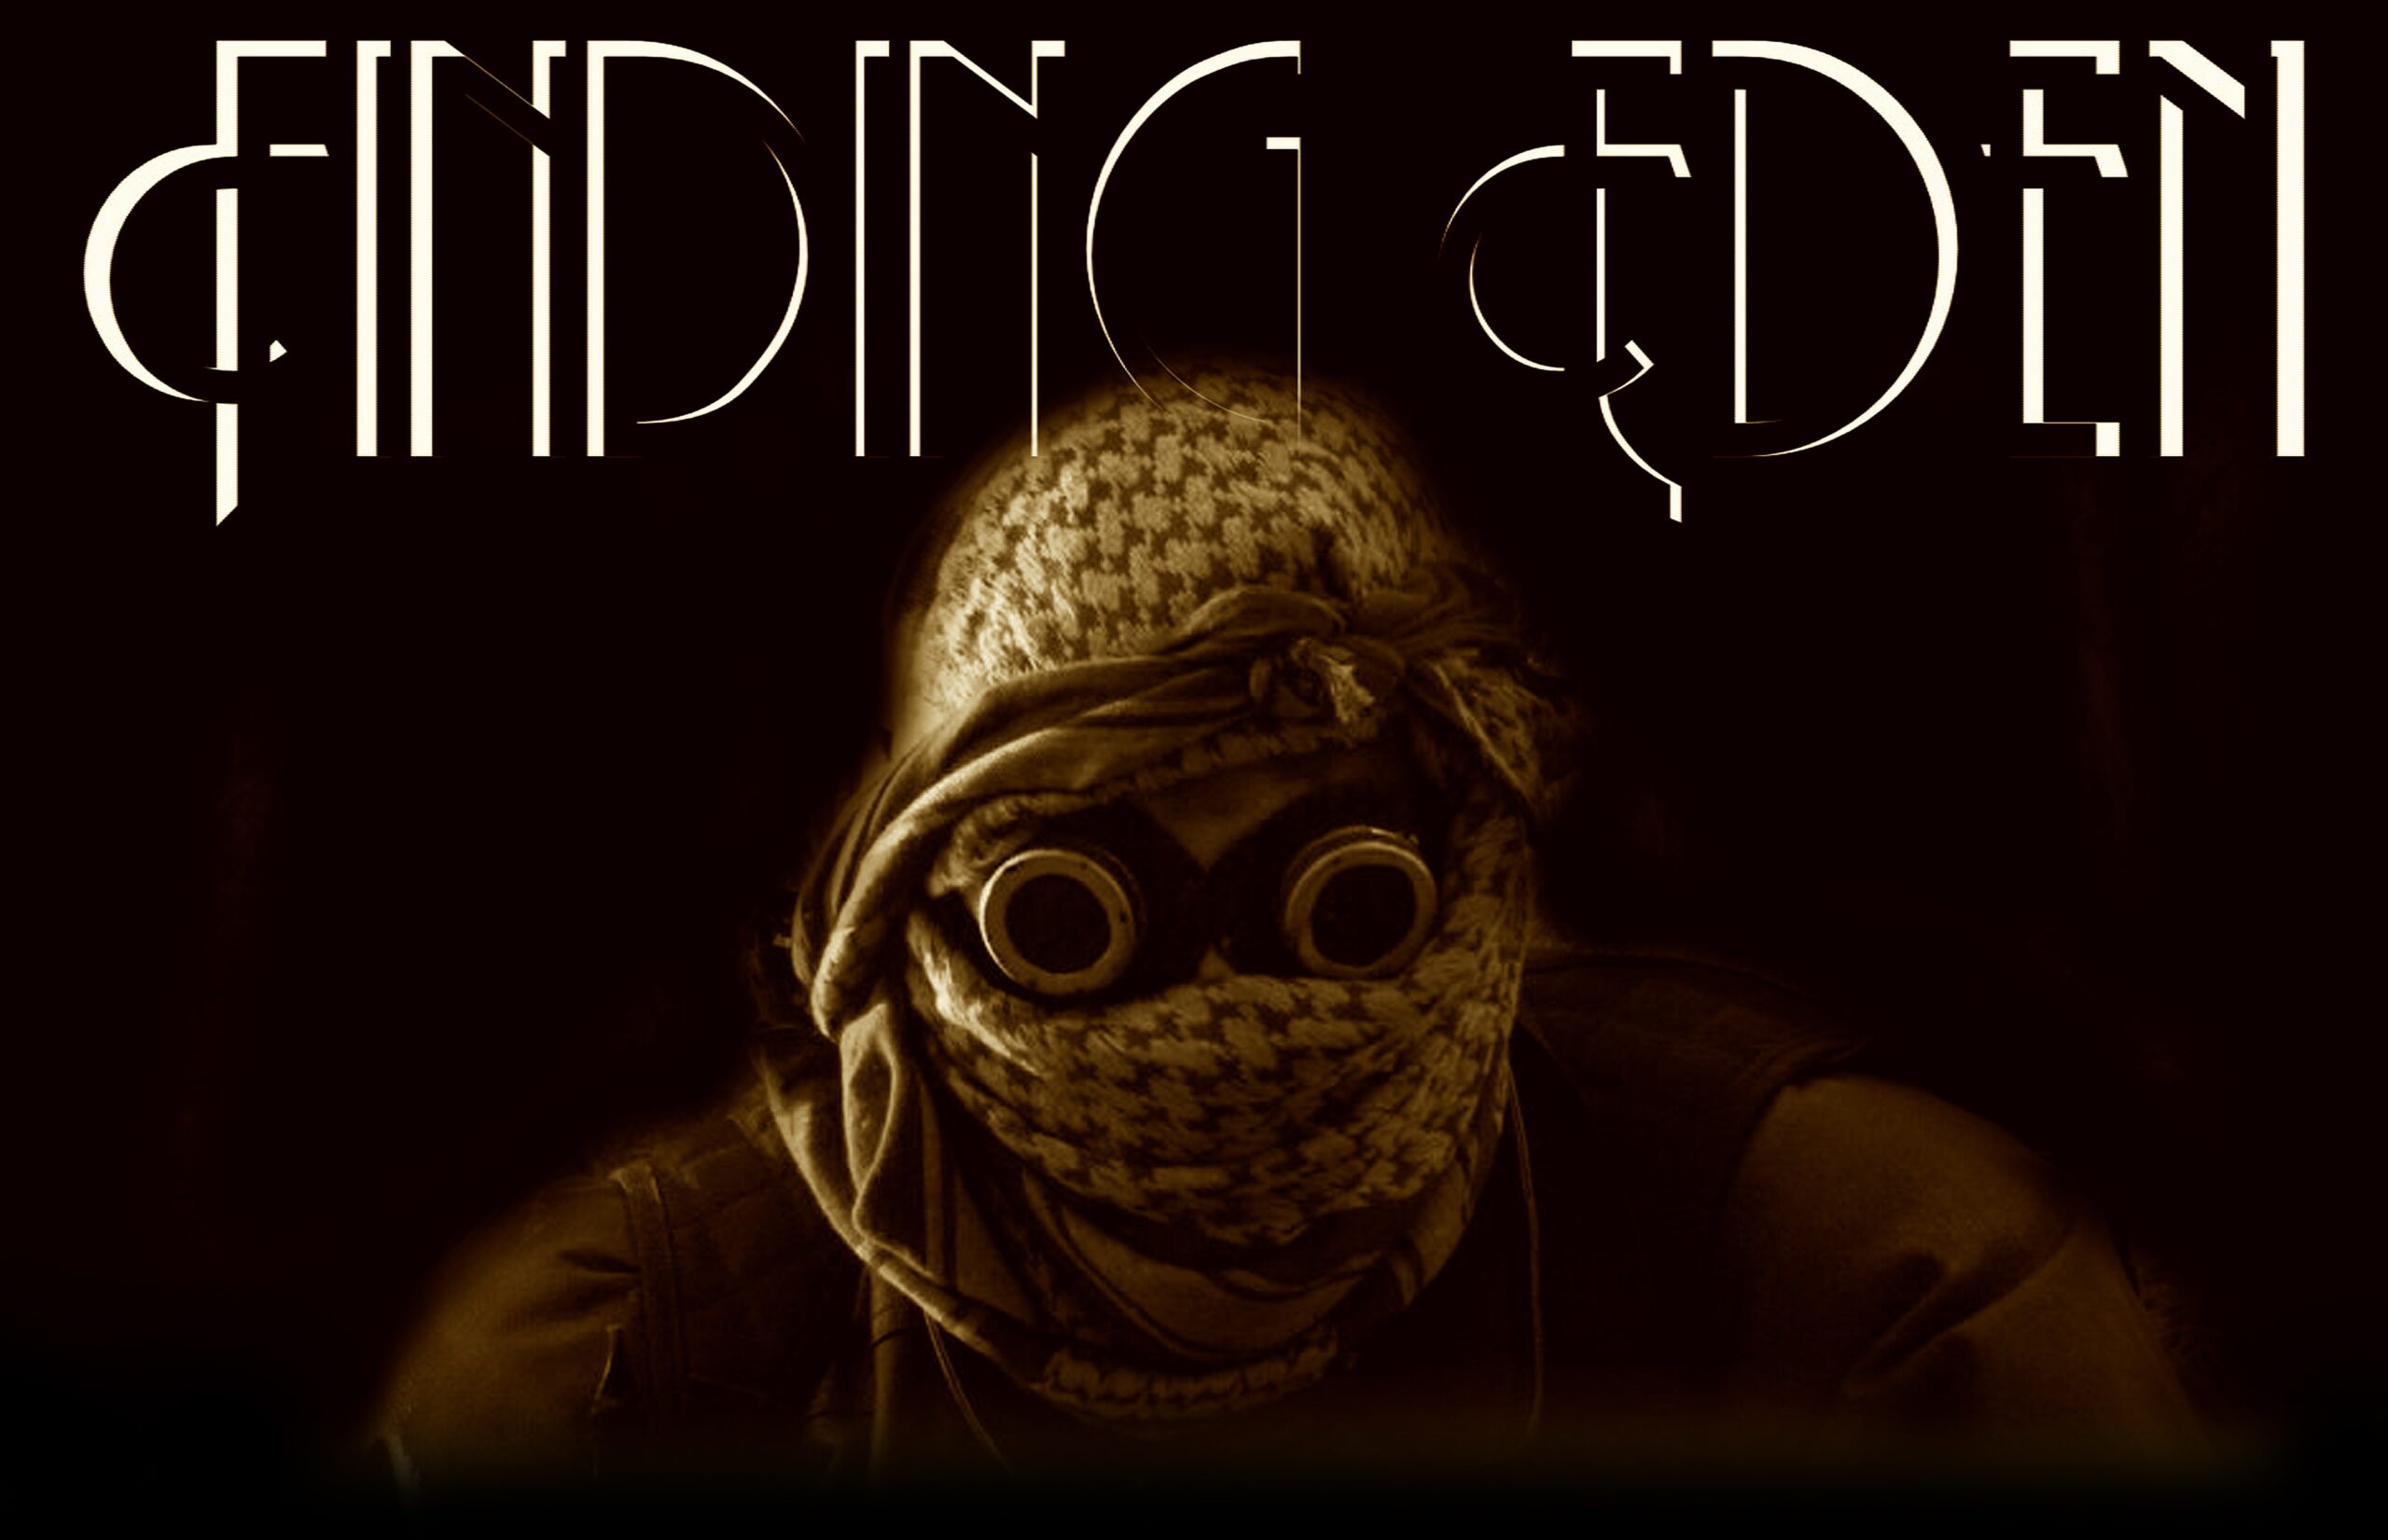 Banner from Finding Eden